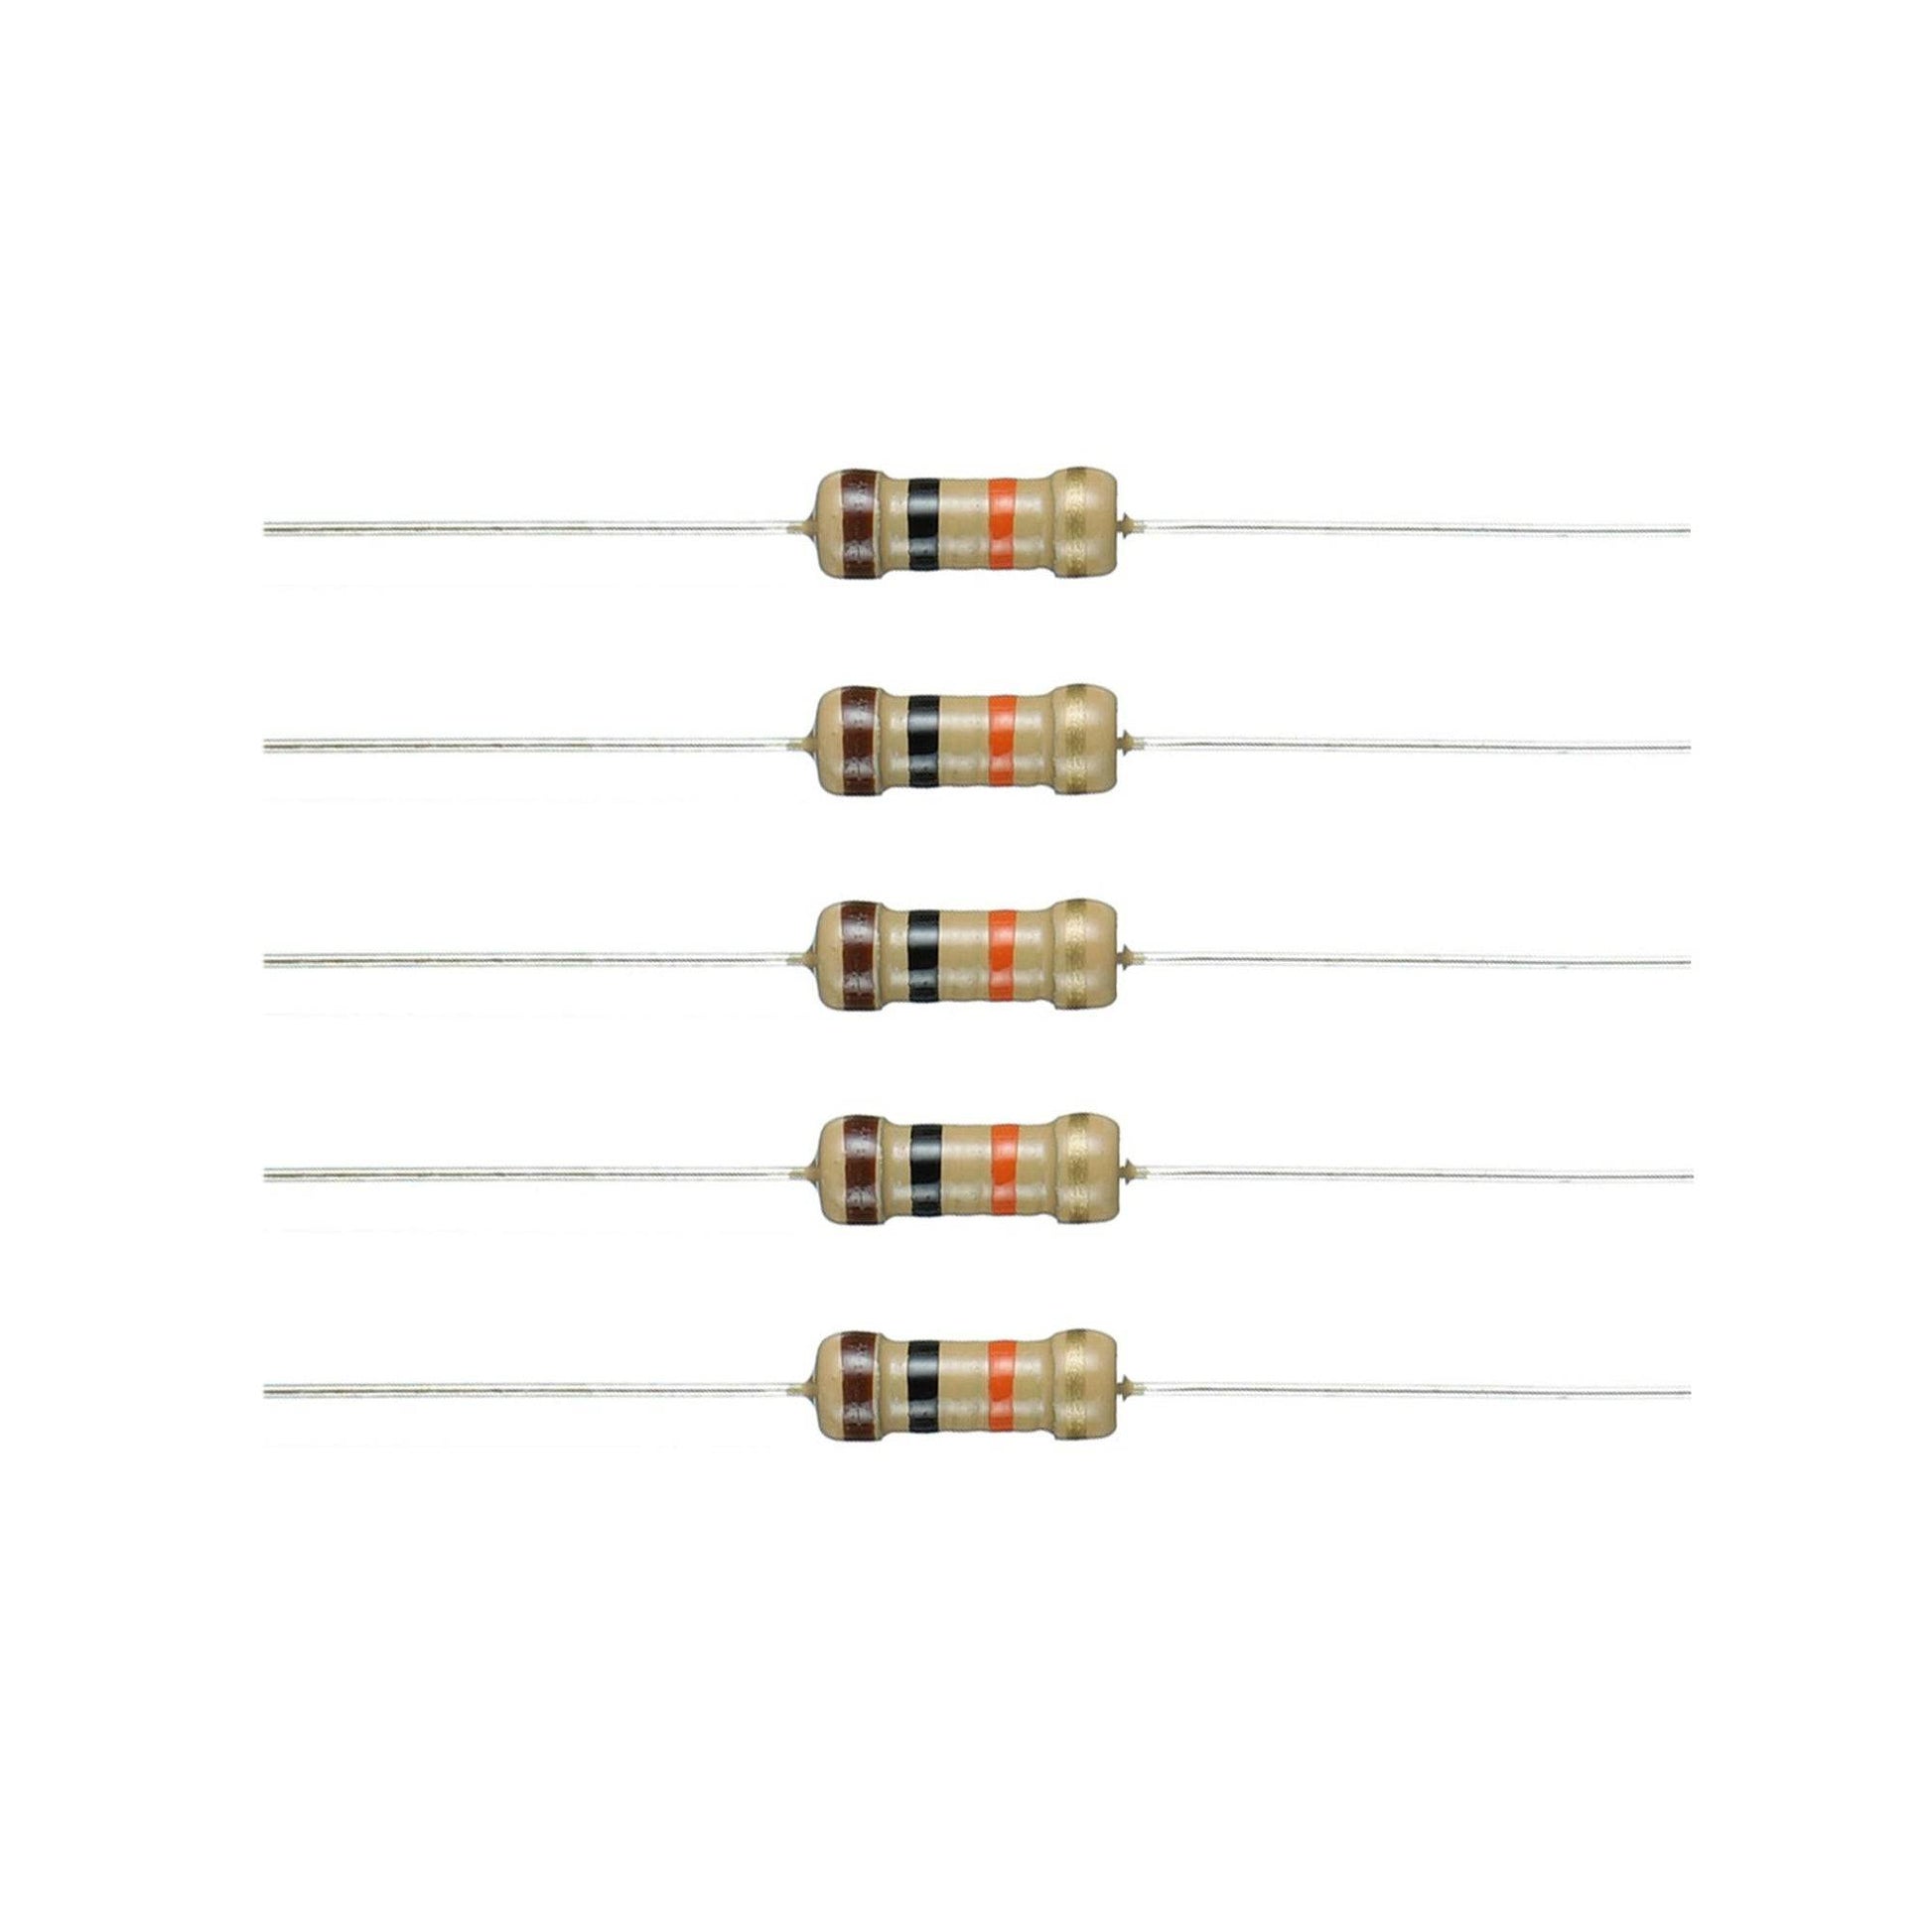 1K Ohm Resistor